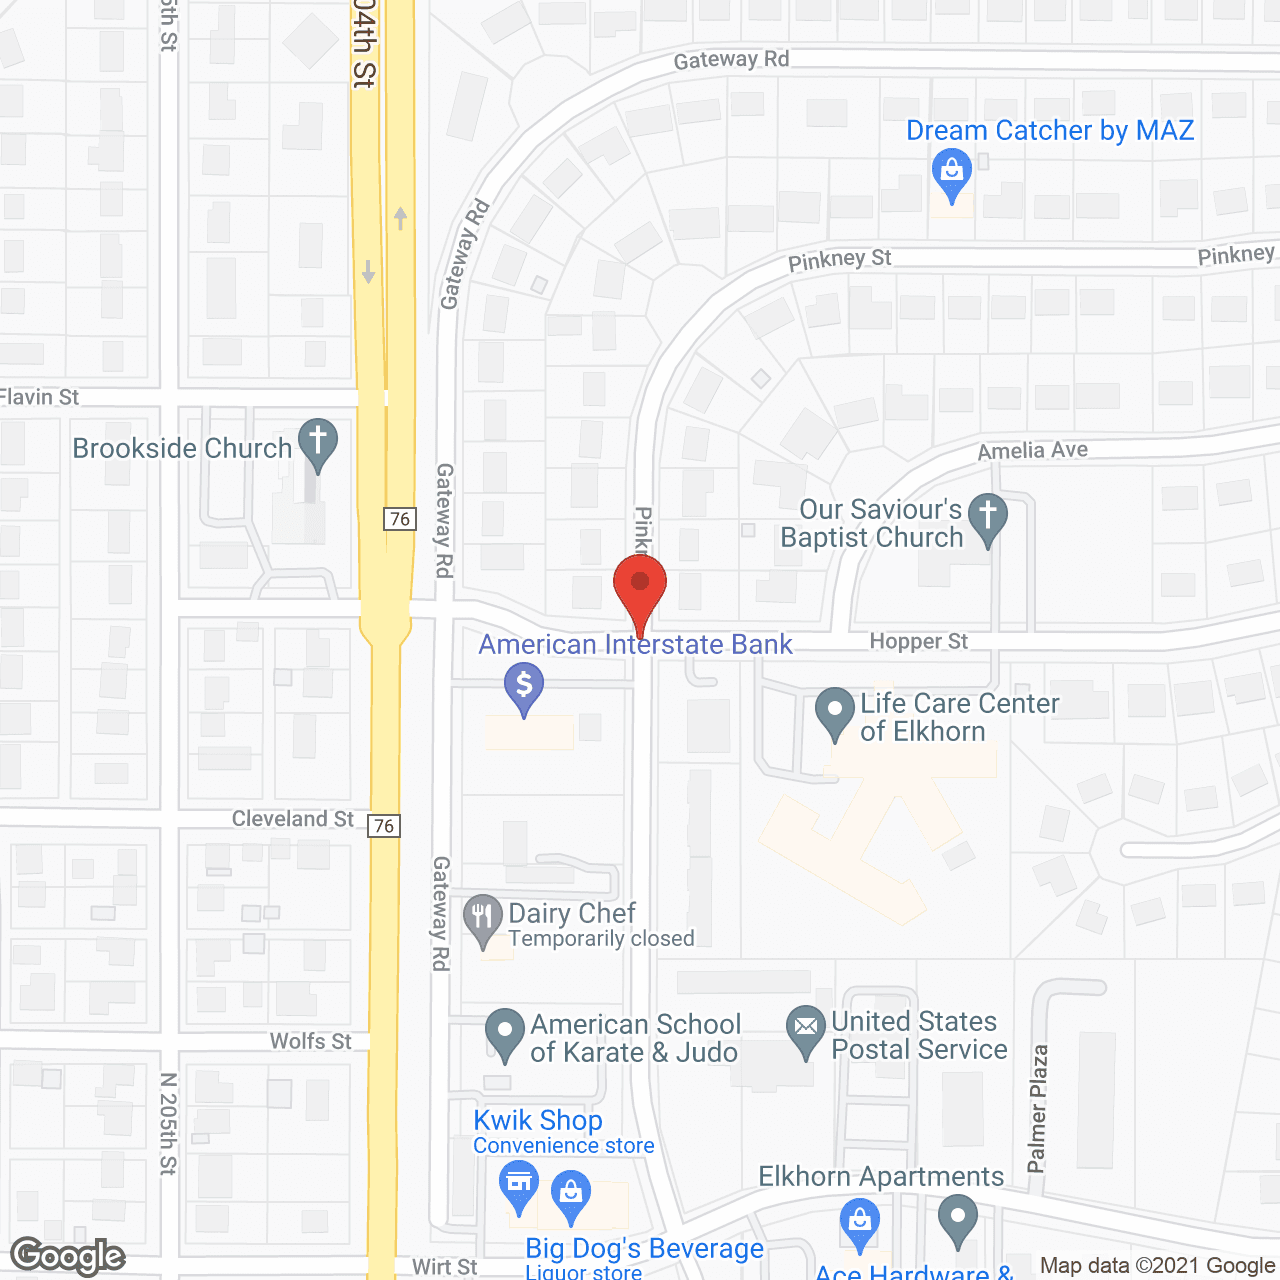 Life Care Center of Elkhorn in google map